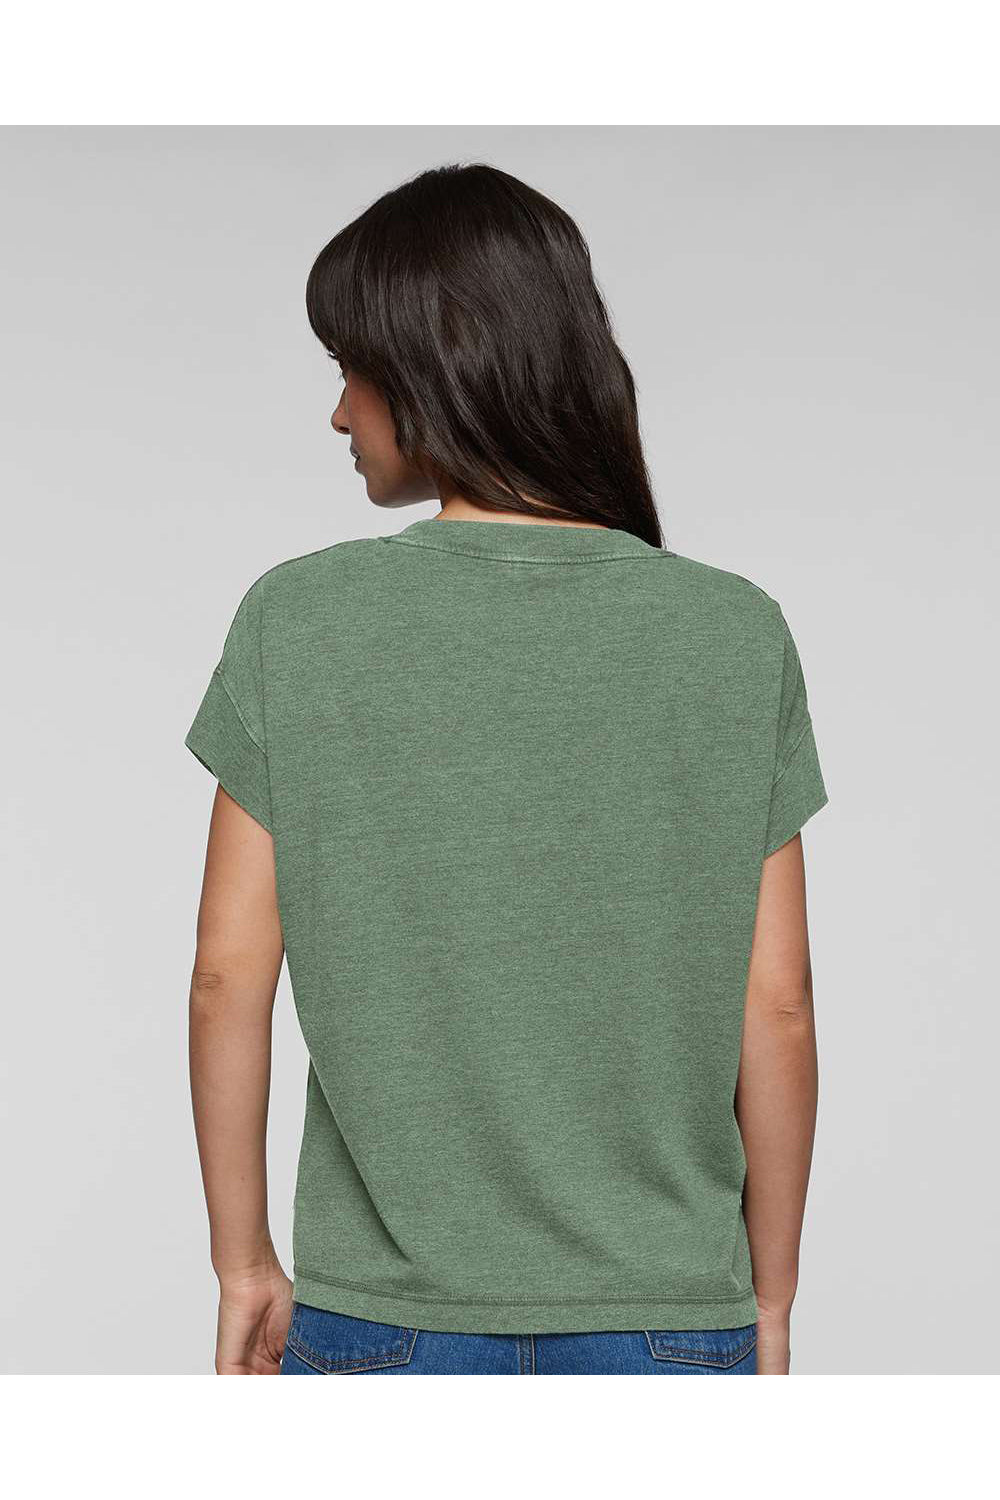 LAT 3502 Womens Relaxed Vintage Wash Short Sleeve Crewneck T-Shirt Basil Green Model Back